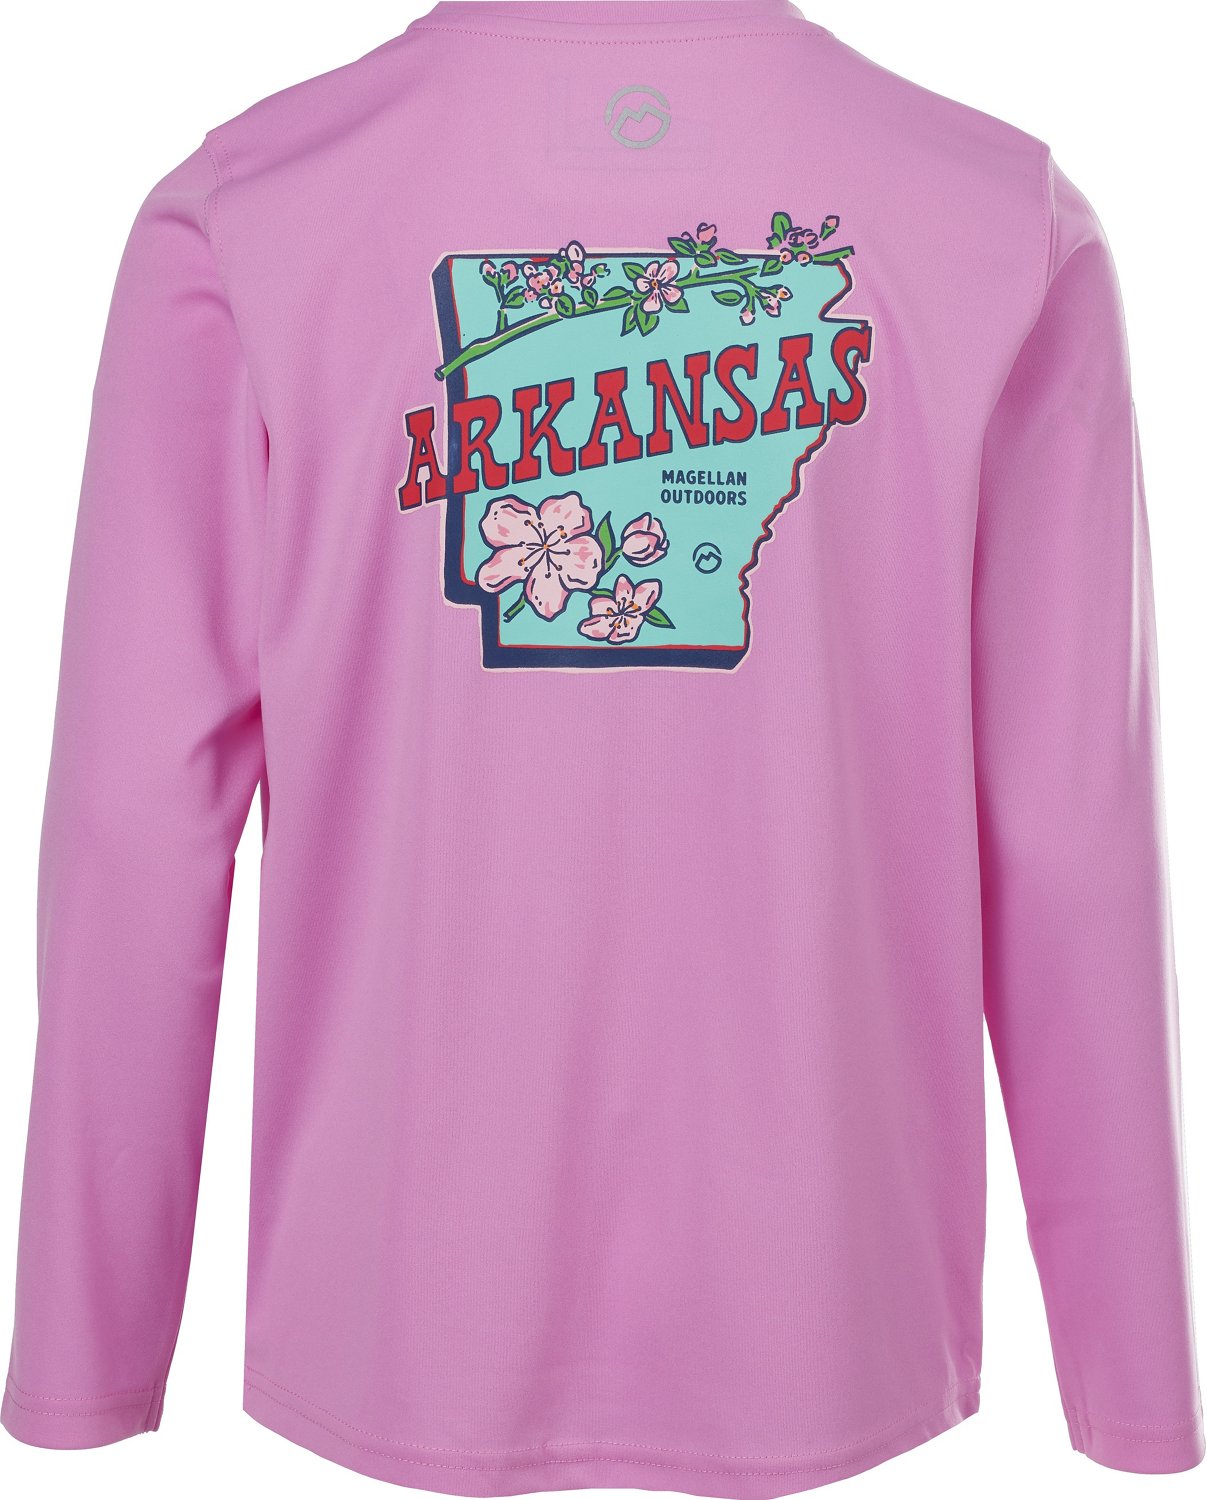 Magellan Outdoors Girls' Arkansas Local State Graphic Crew Long Sleeve  T-shirt